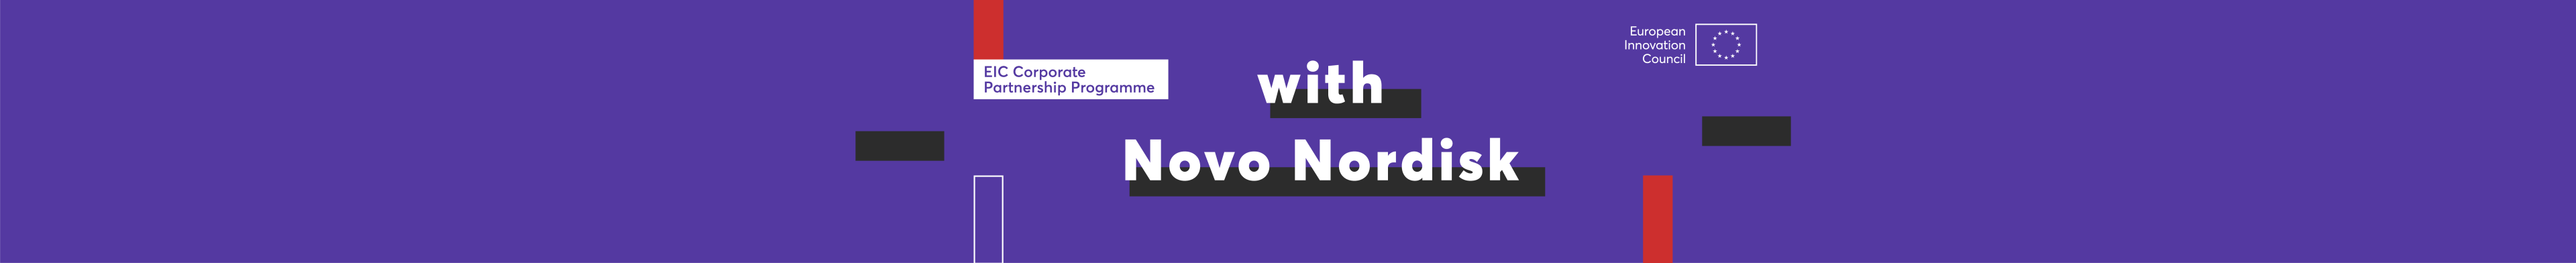 EIC Corporate Day Novo Nordisk Community Banner